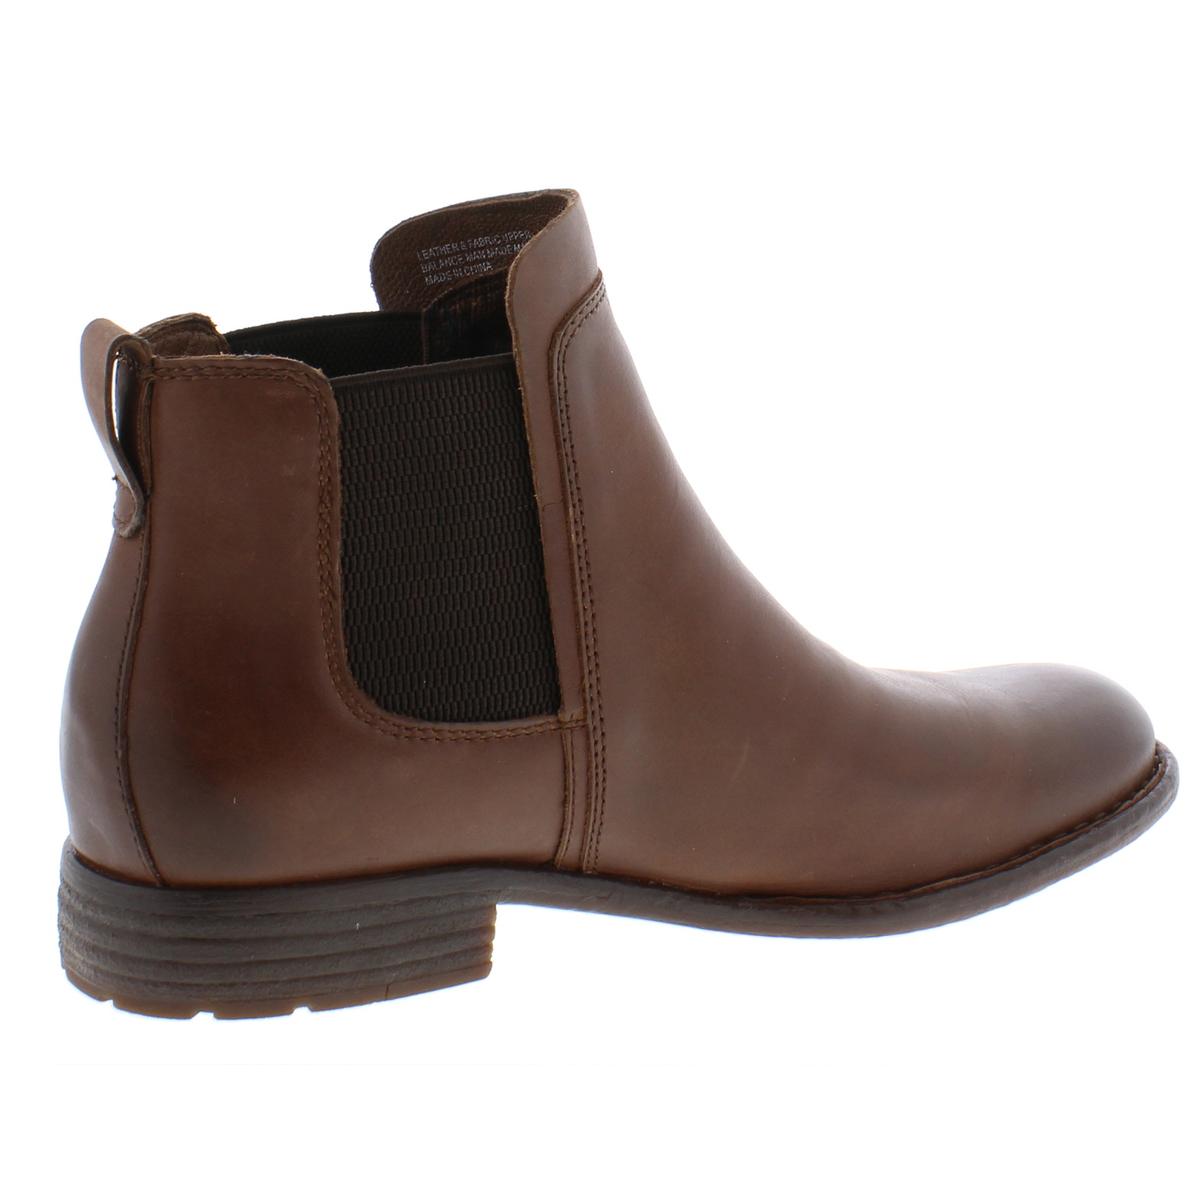 Born Womens Neah Brown Leather Chelsea Boots Shoes 11 Medium (B,M) BHFO ...